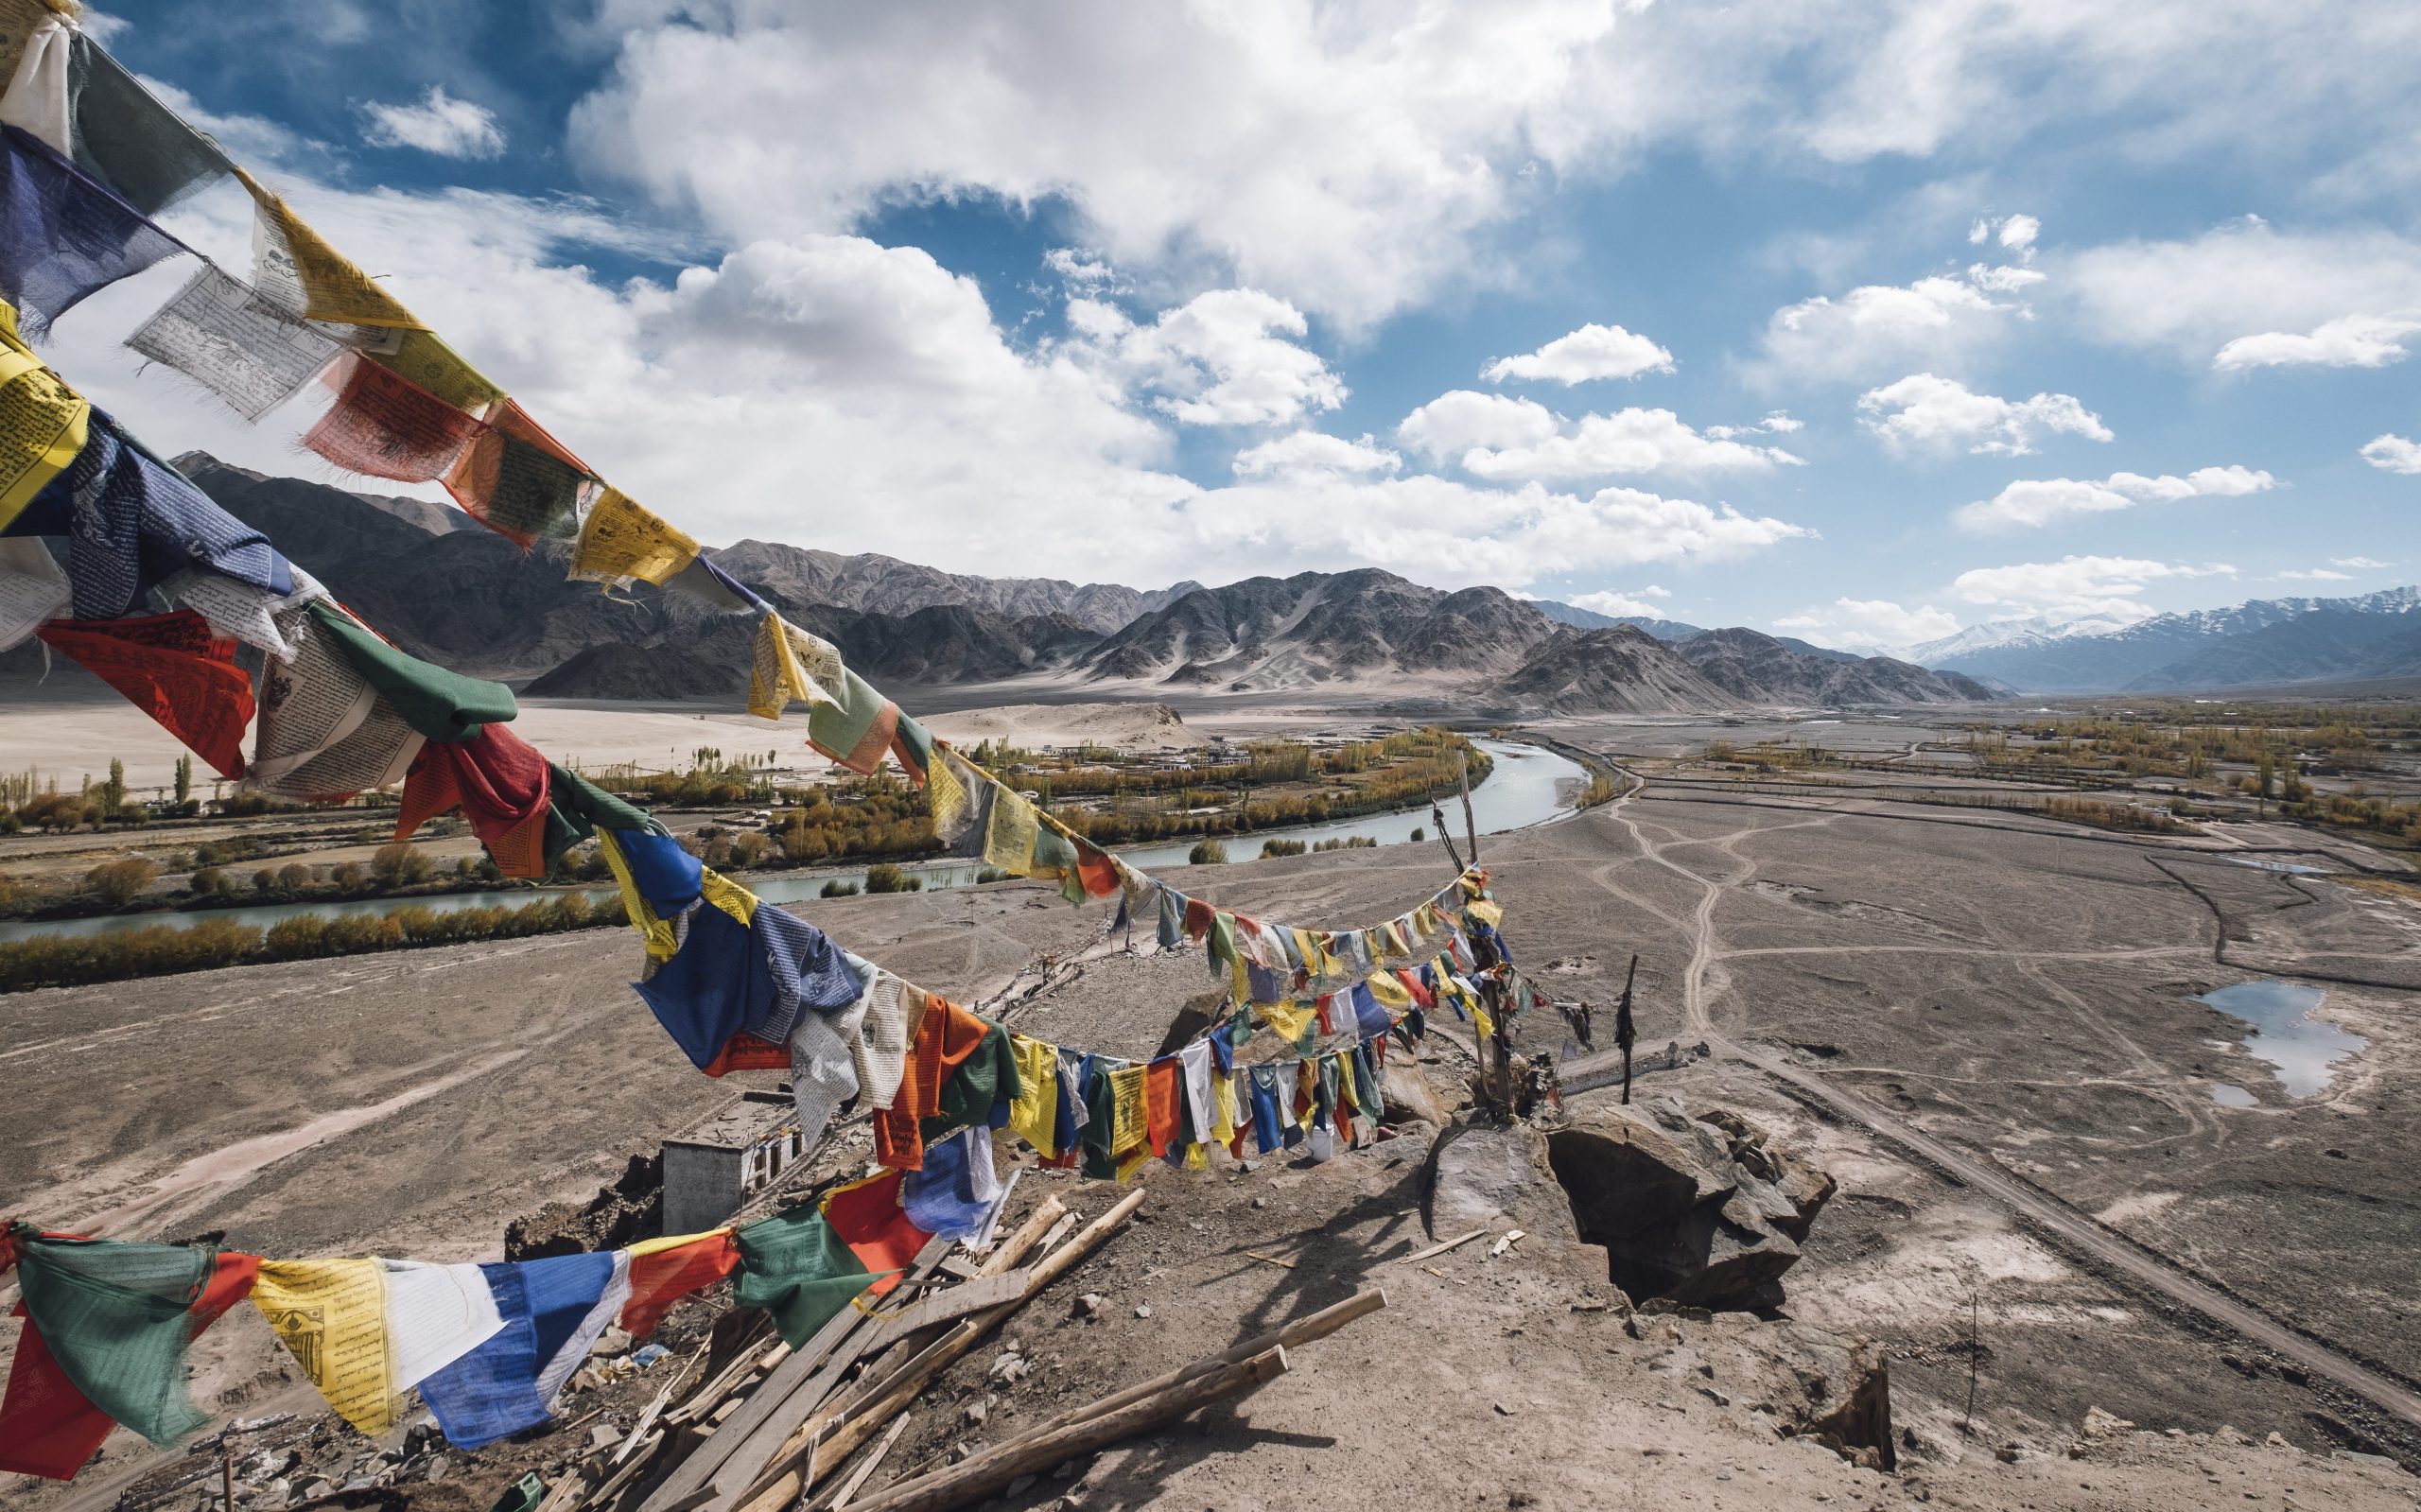 Interesting facts about Ladakh